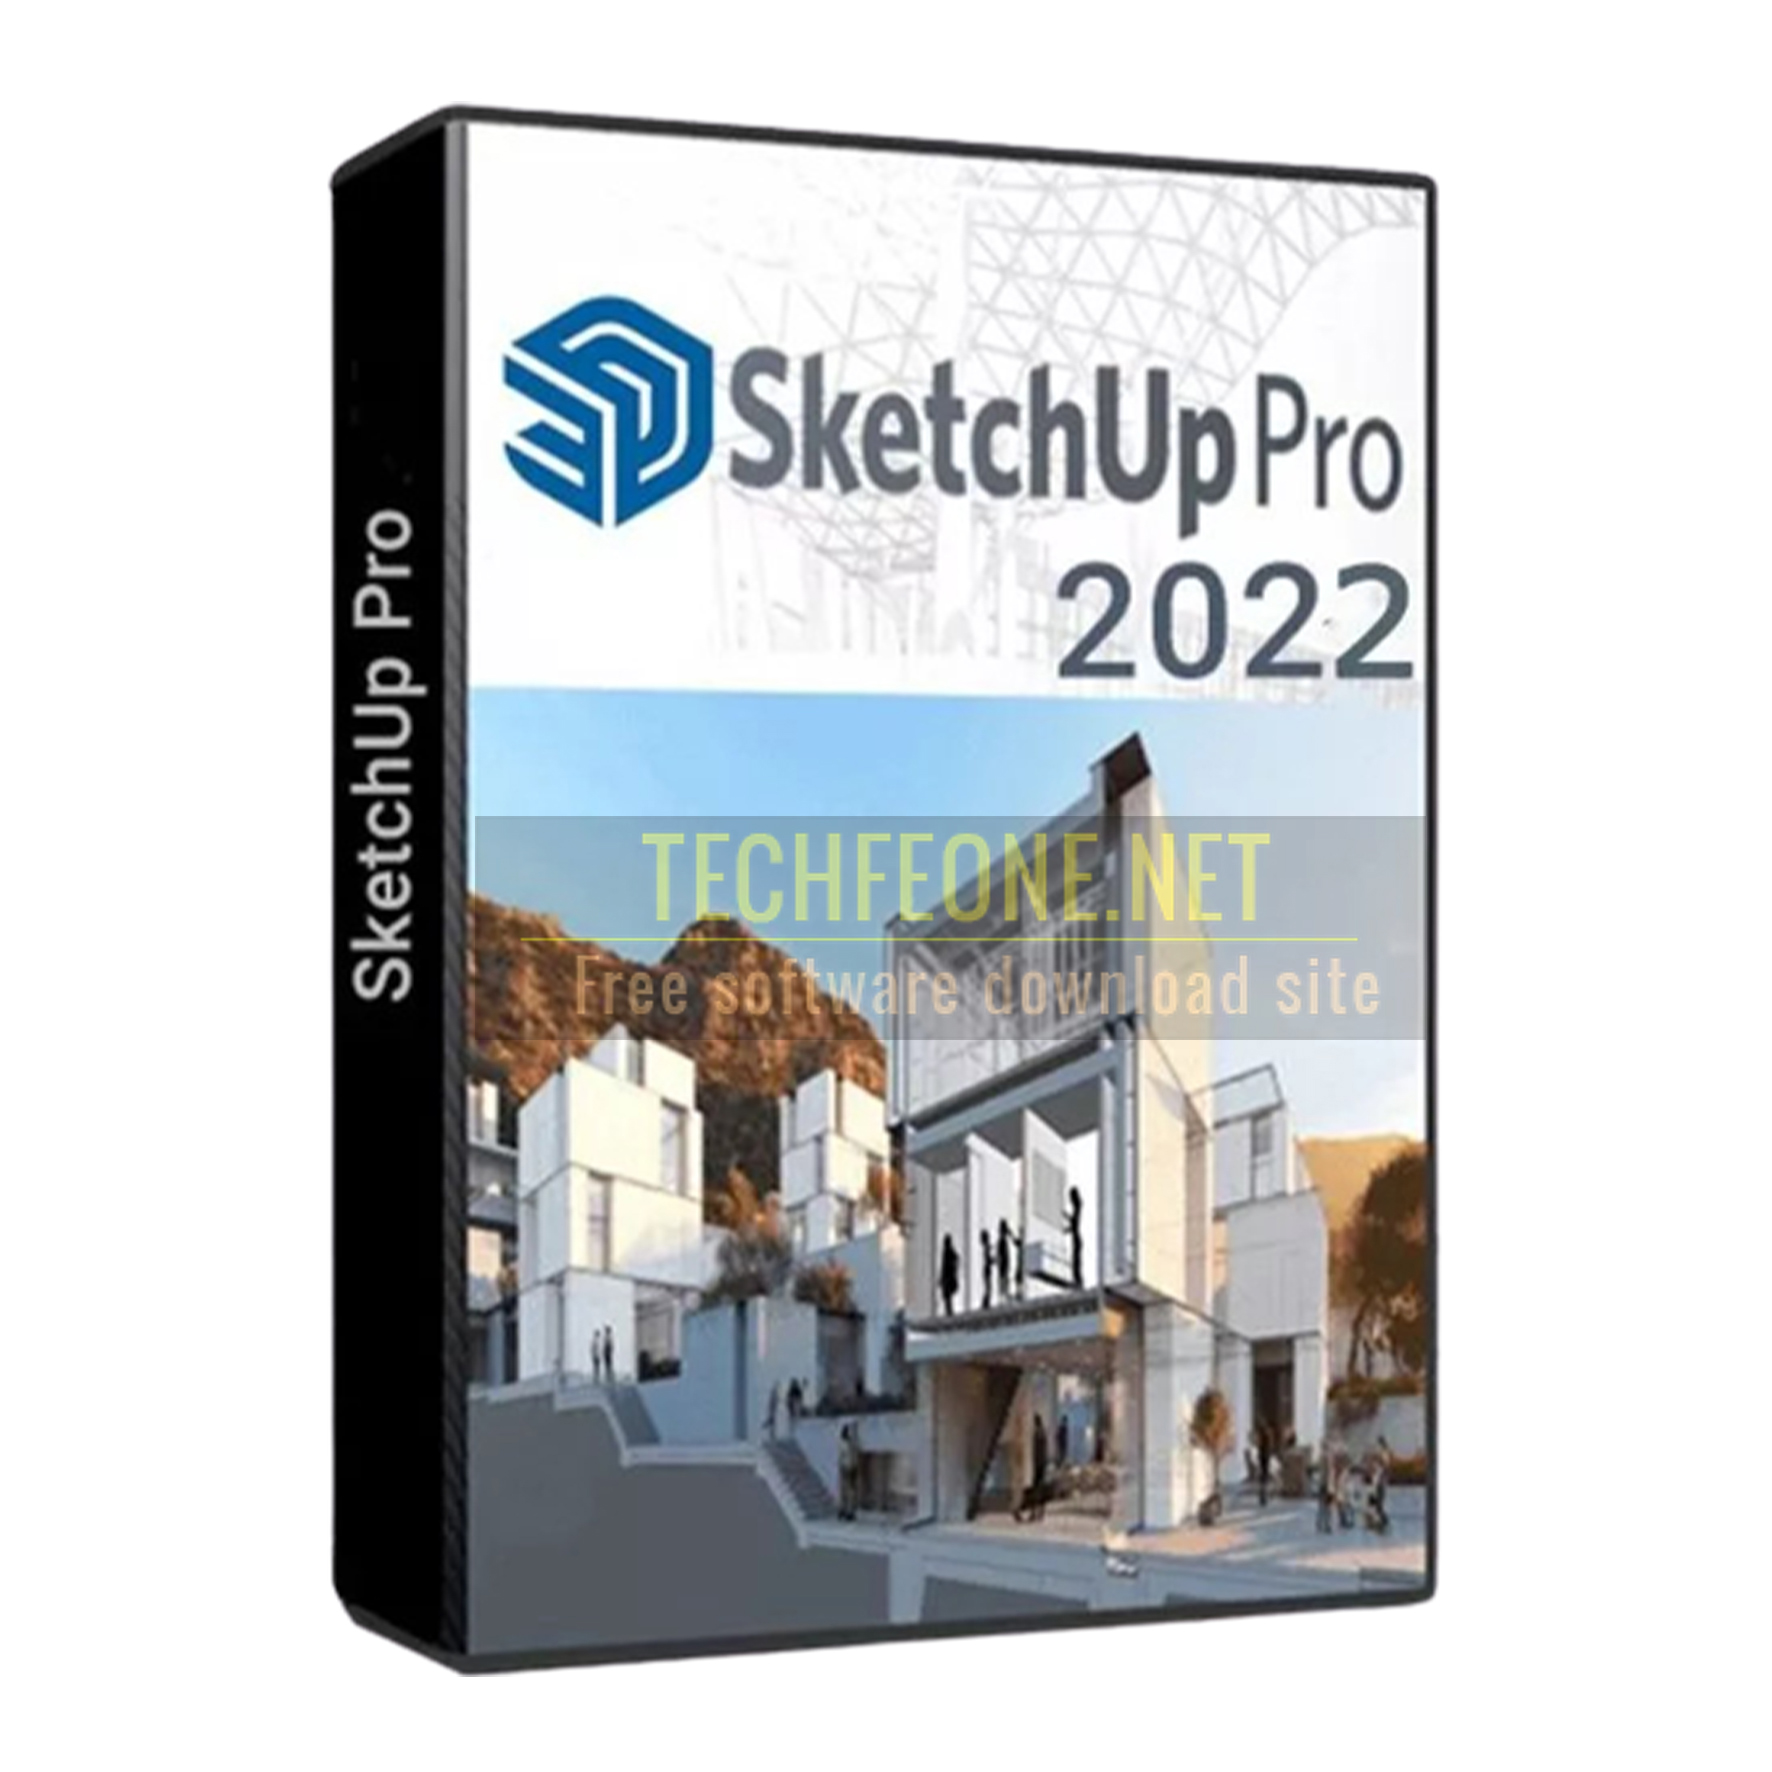 sketchup pro 2022 download